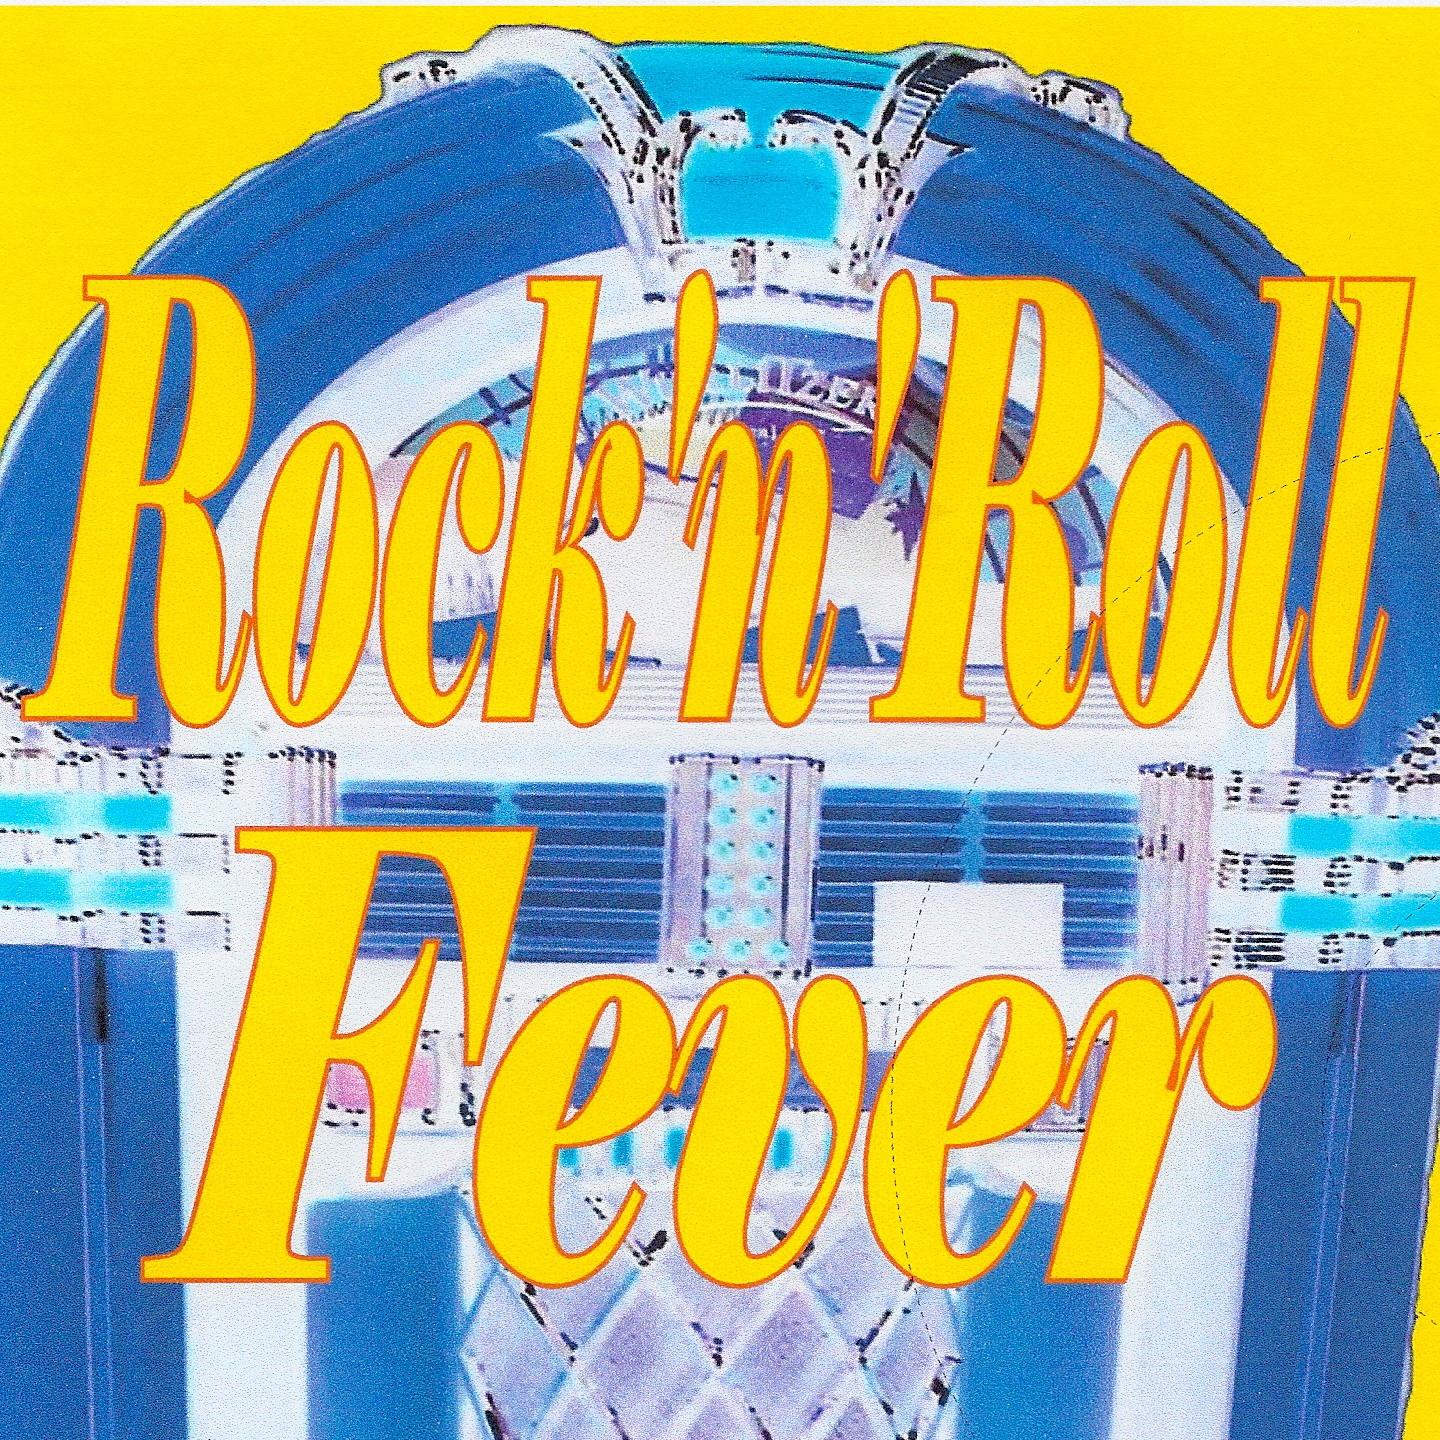 Rock n roll fever